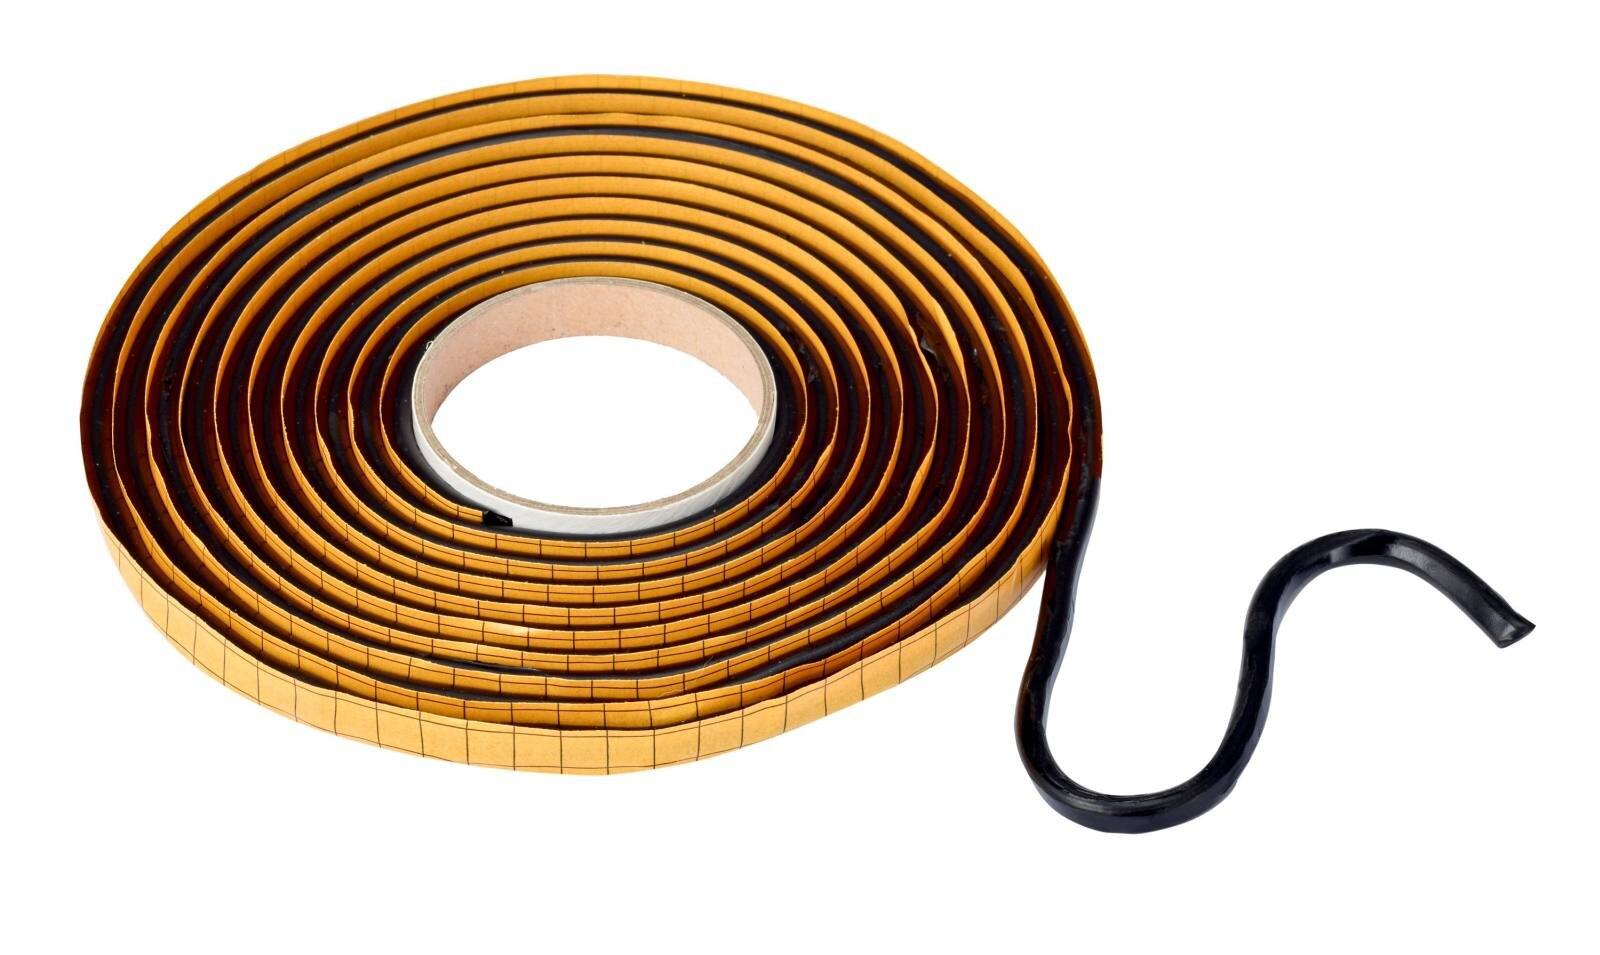 3M Scotch-Weld round cord based on butyl rubber 5313, black, diameter 6 mm x 25 m